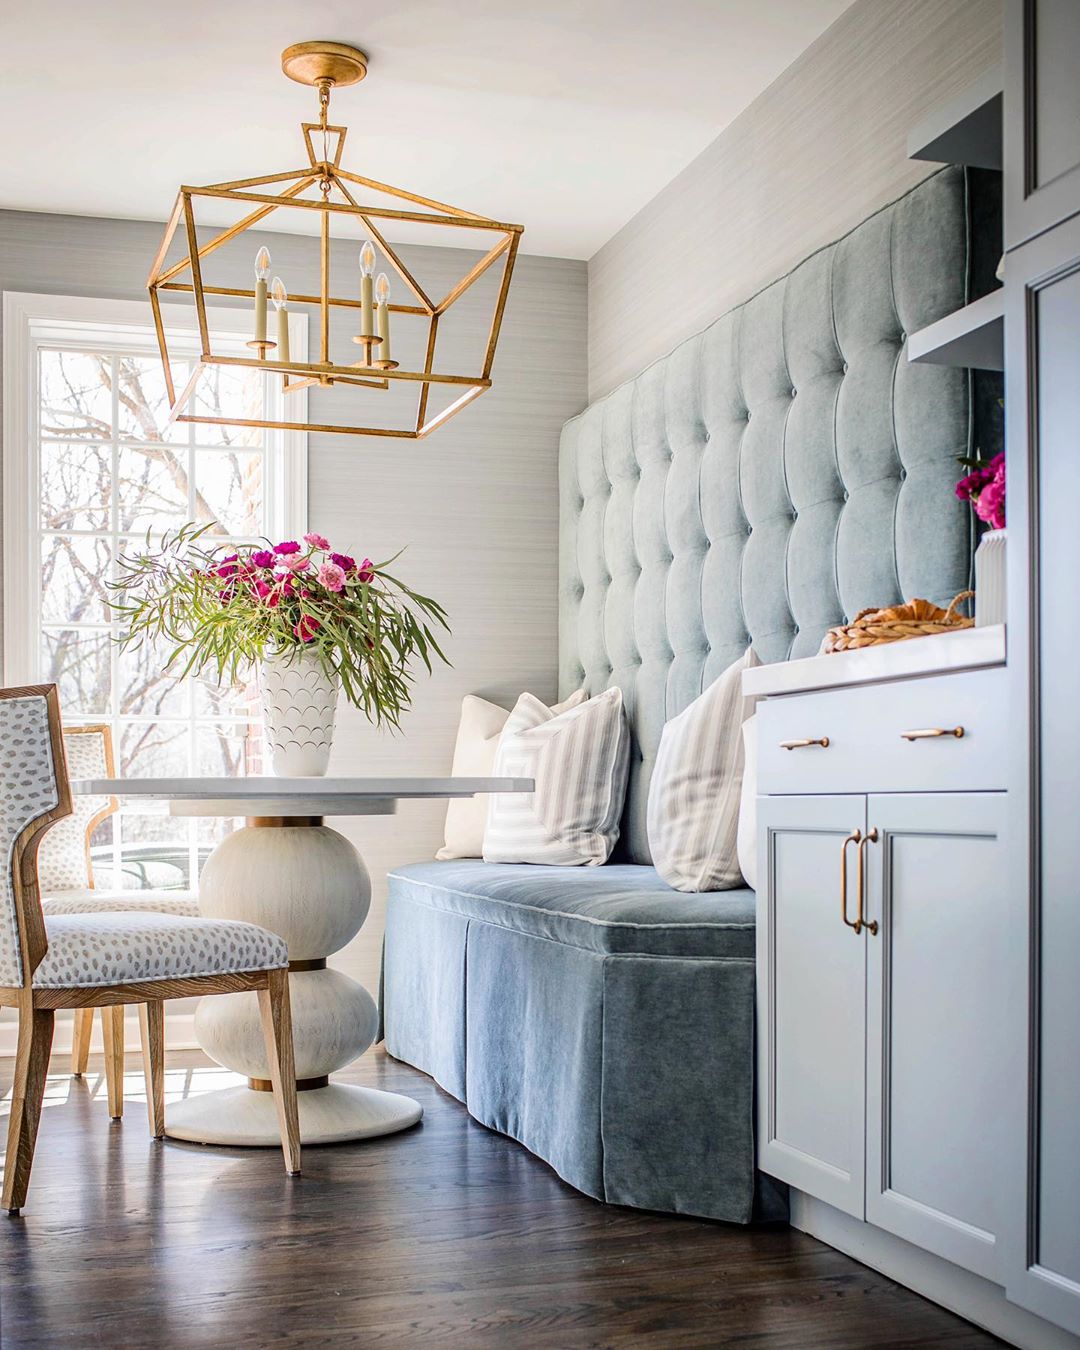 Breakfast nook in luxury kitchen. Photo by Instagram user @mollysingerdesign